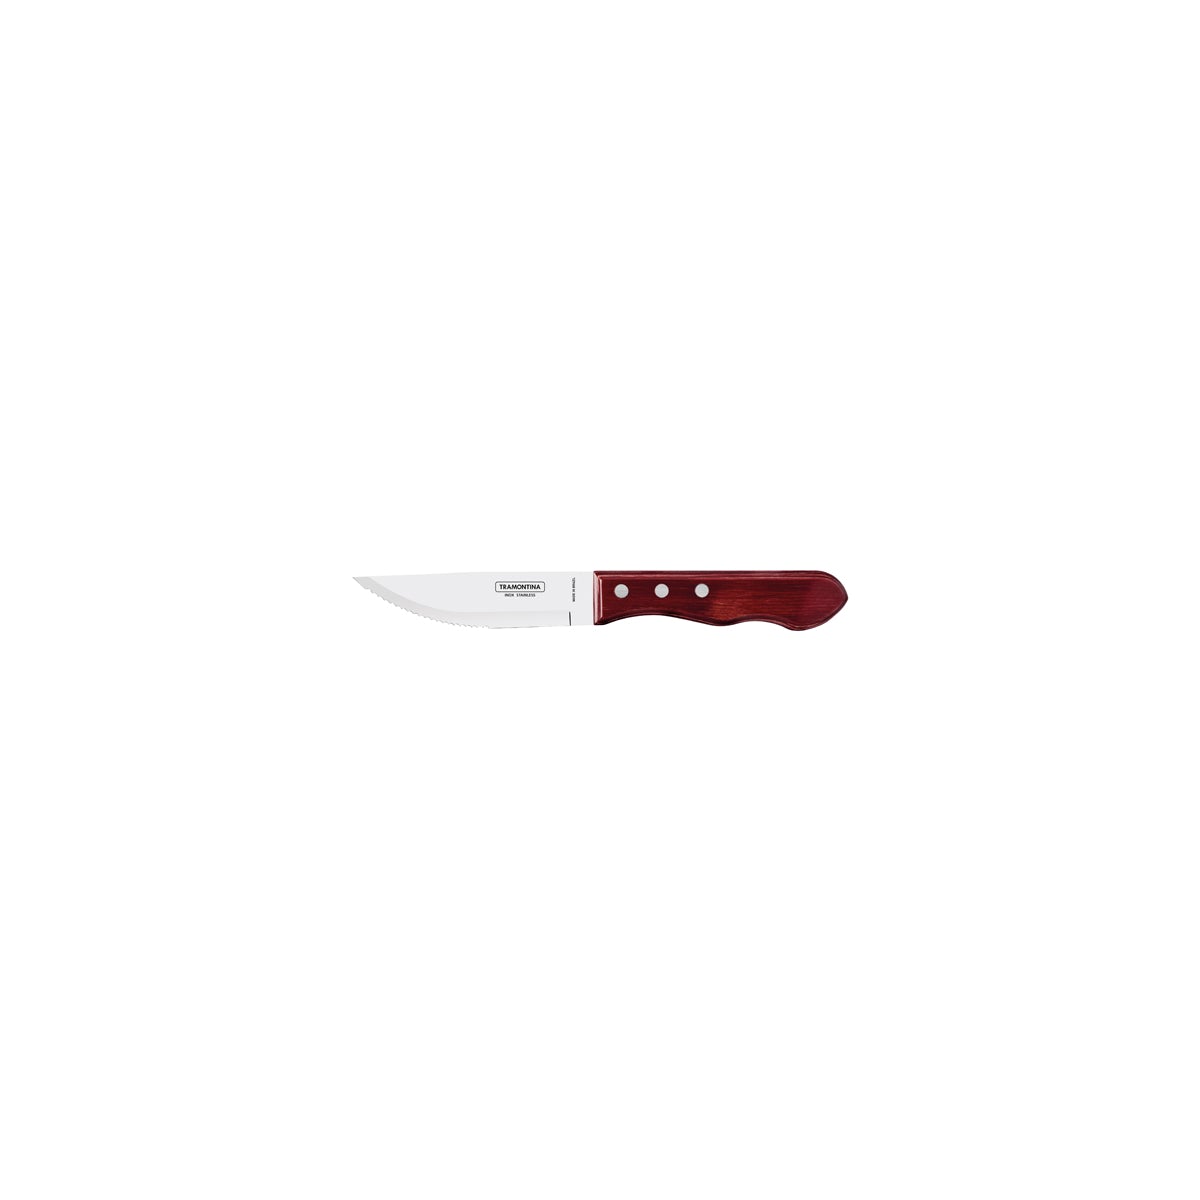 TM21116/075 Tramontina Churrasco Steak Knife Jumbo Serrated Wide Blade with Polywood Handle Red 127mm Tomkin Australia Hospitality Supplies